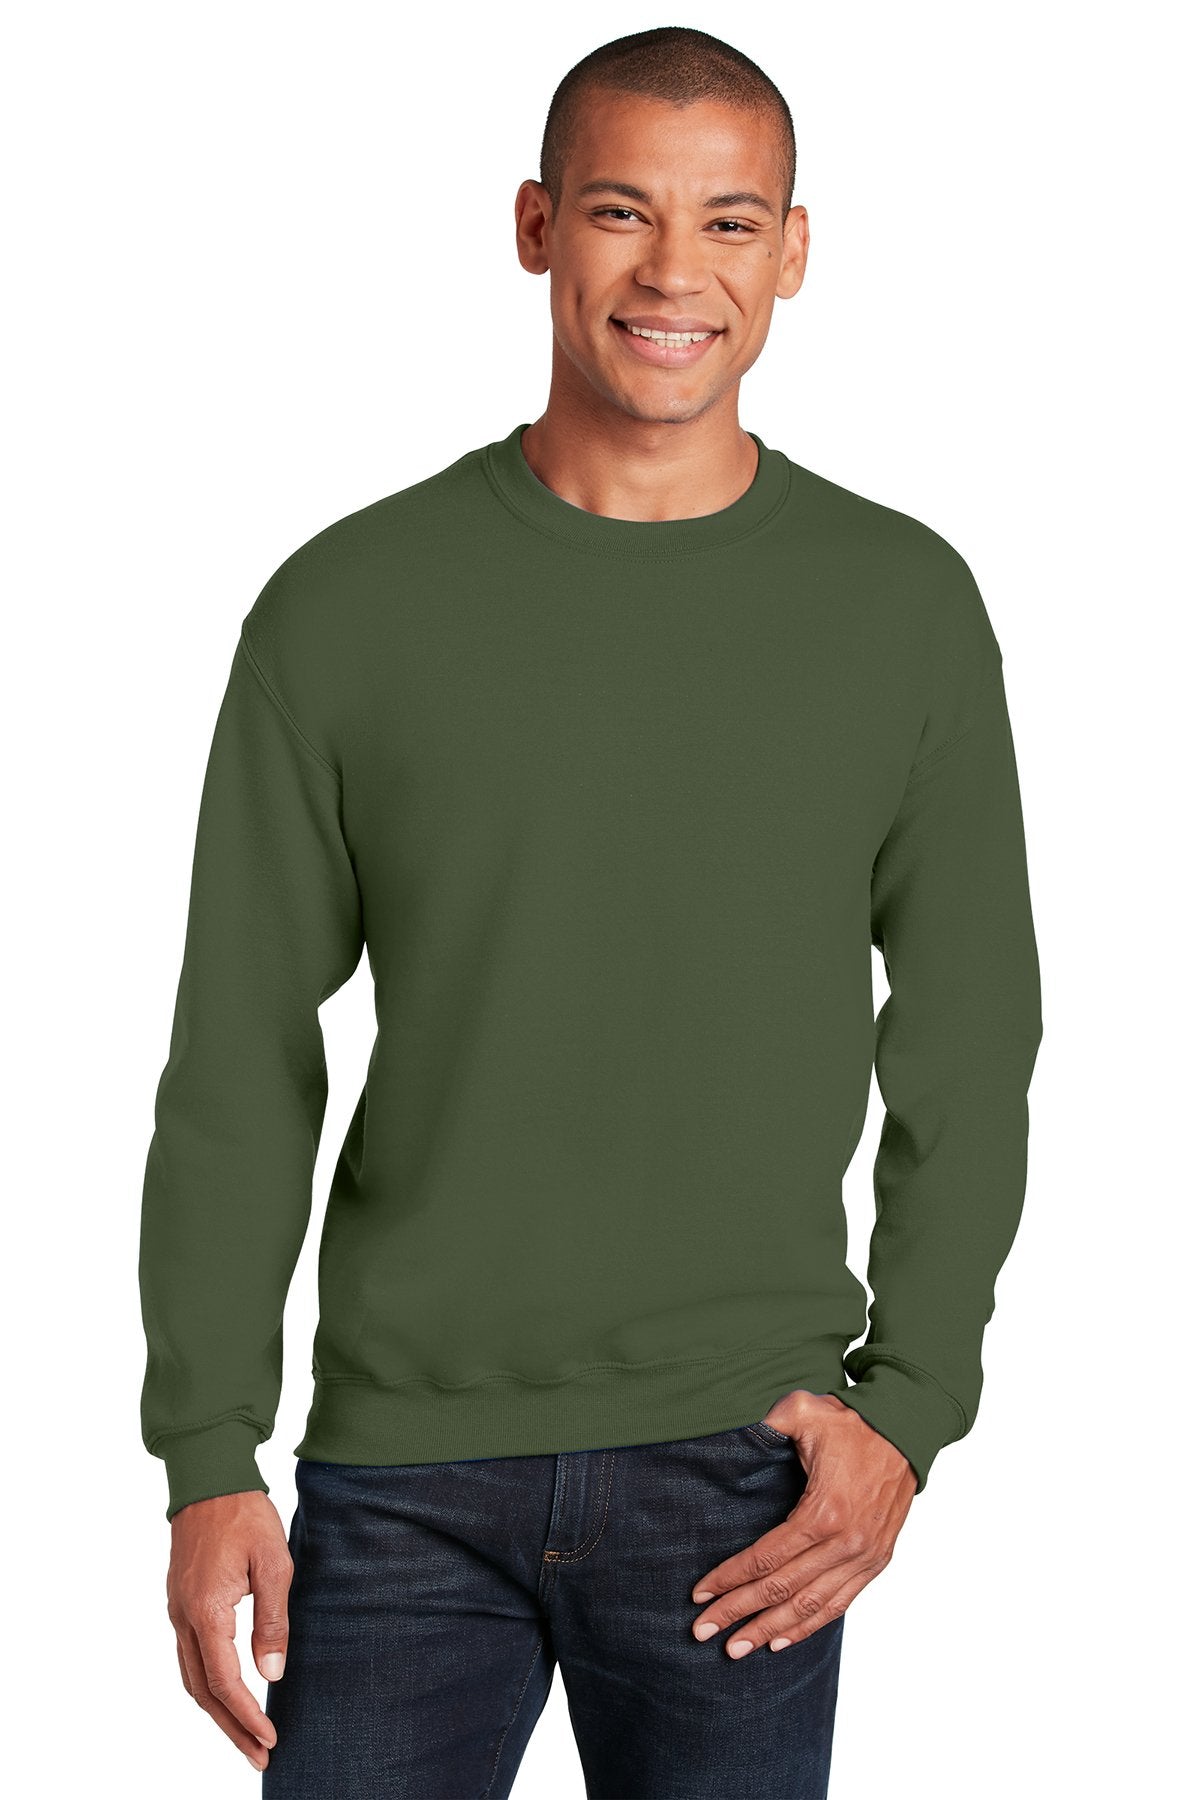 Gildan Military Green 18000 custom dri fit sweatshirts